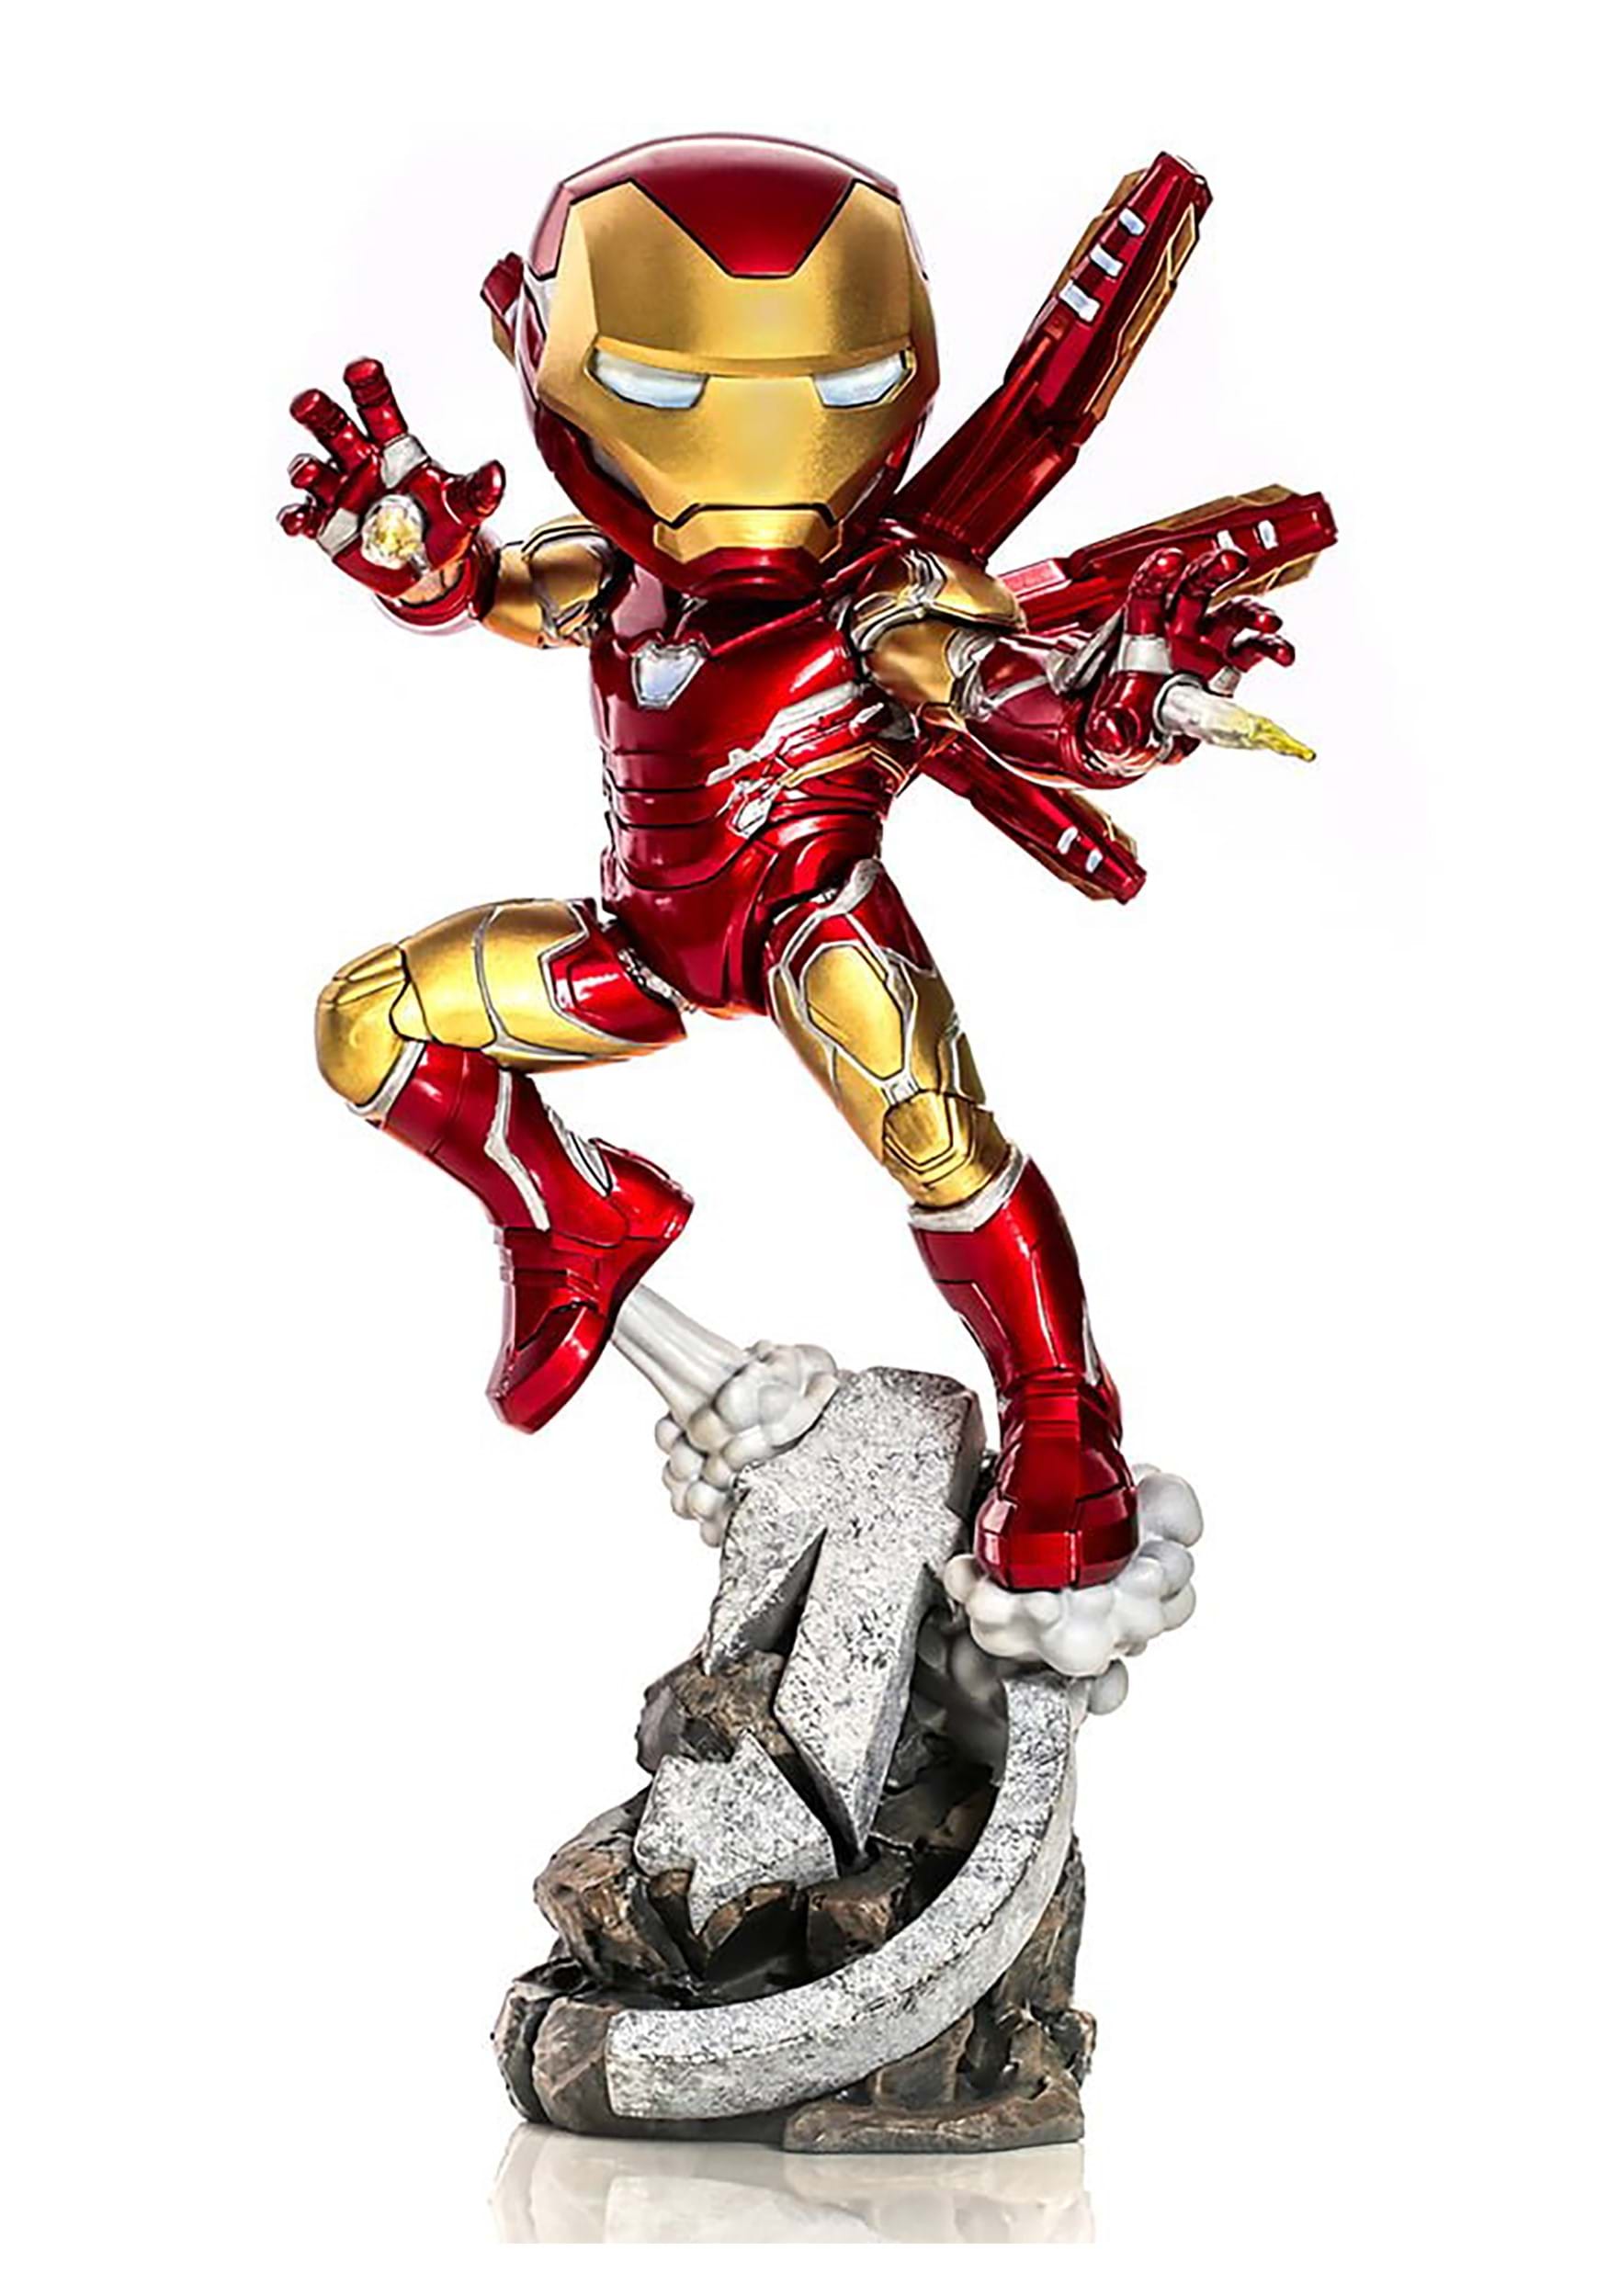 Iron Studios Marvel Avengers: Endgame 4.5" Minico Figure (Iron Man or Captain America) $17.50 + Free Store Pickup at Best Buy